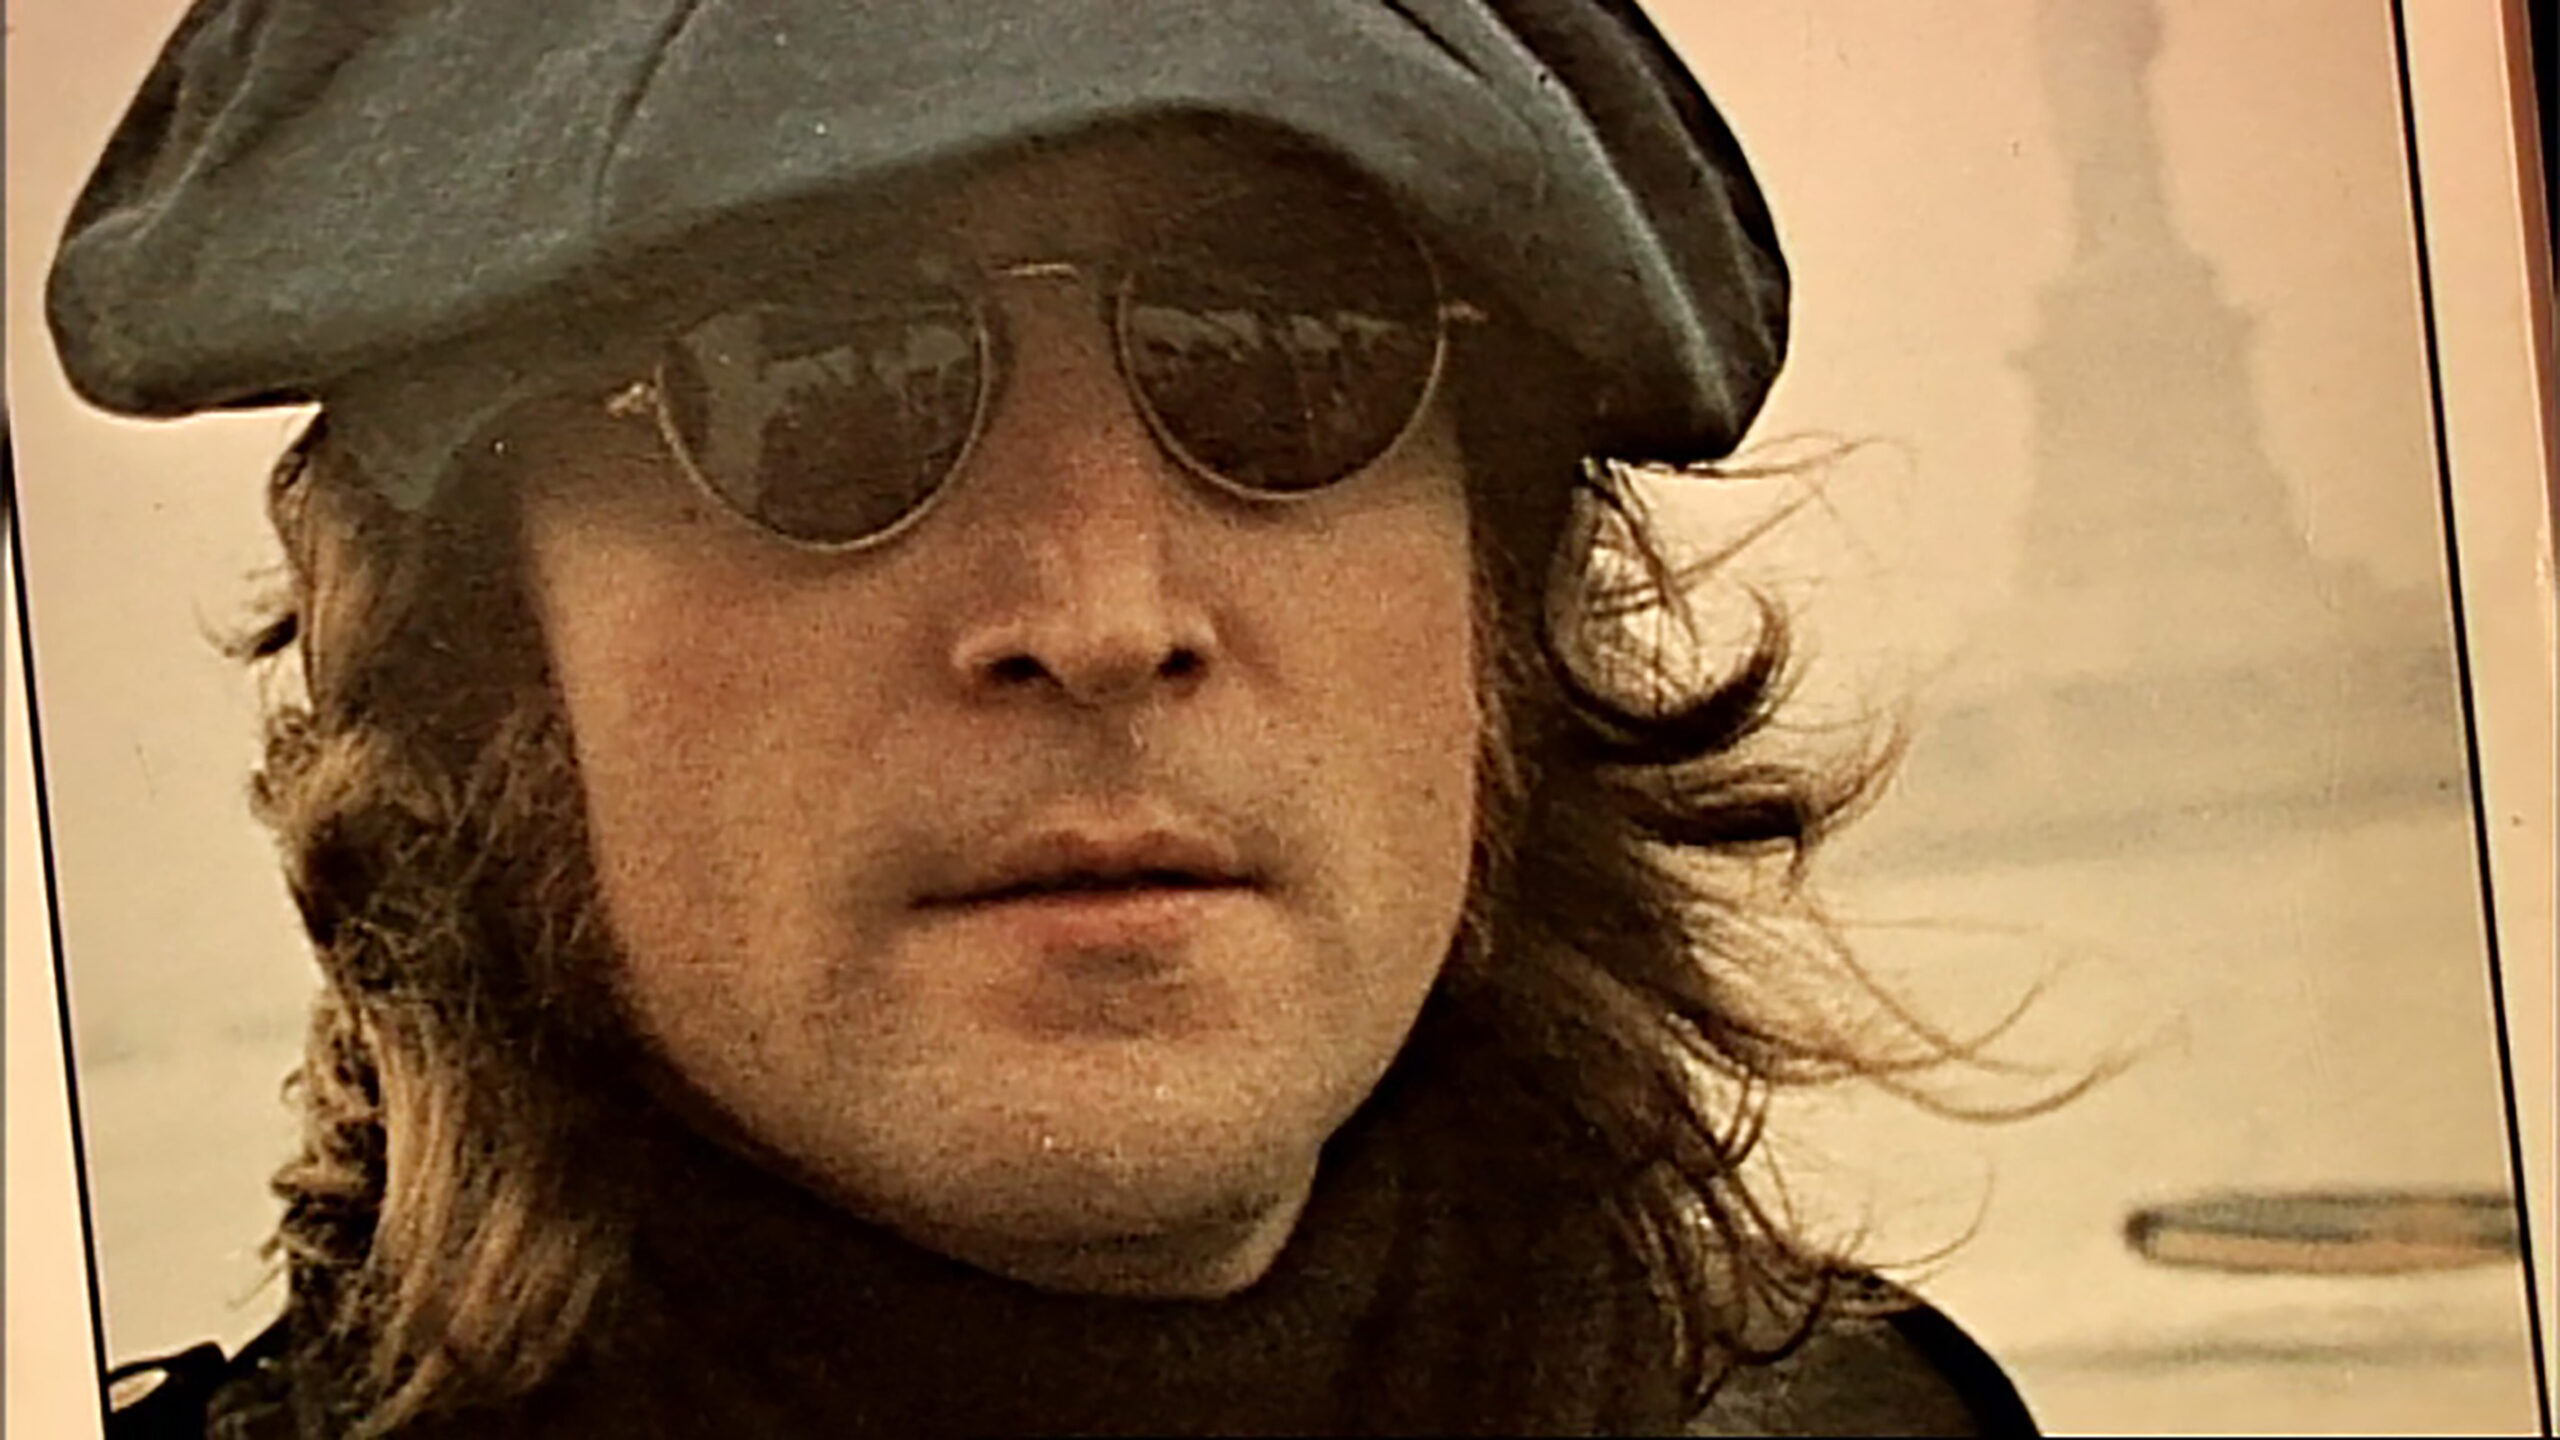 I Killed John Lennon [credit: courtesy of Ufficio Stampa Sky Arte]